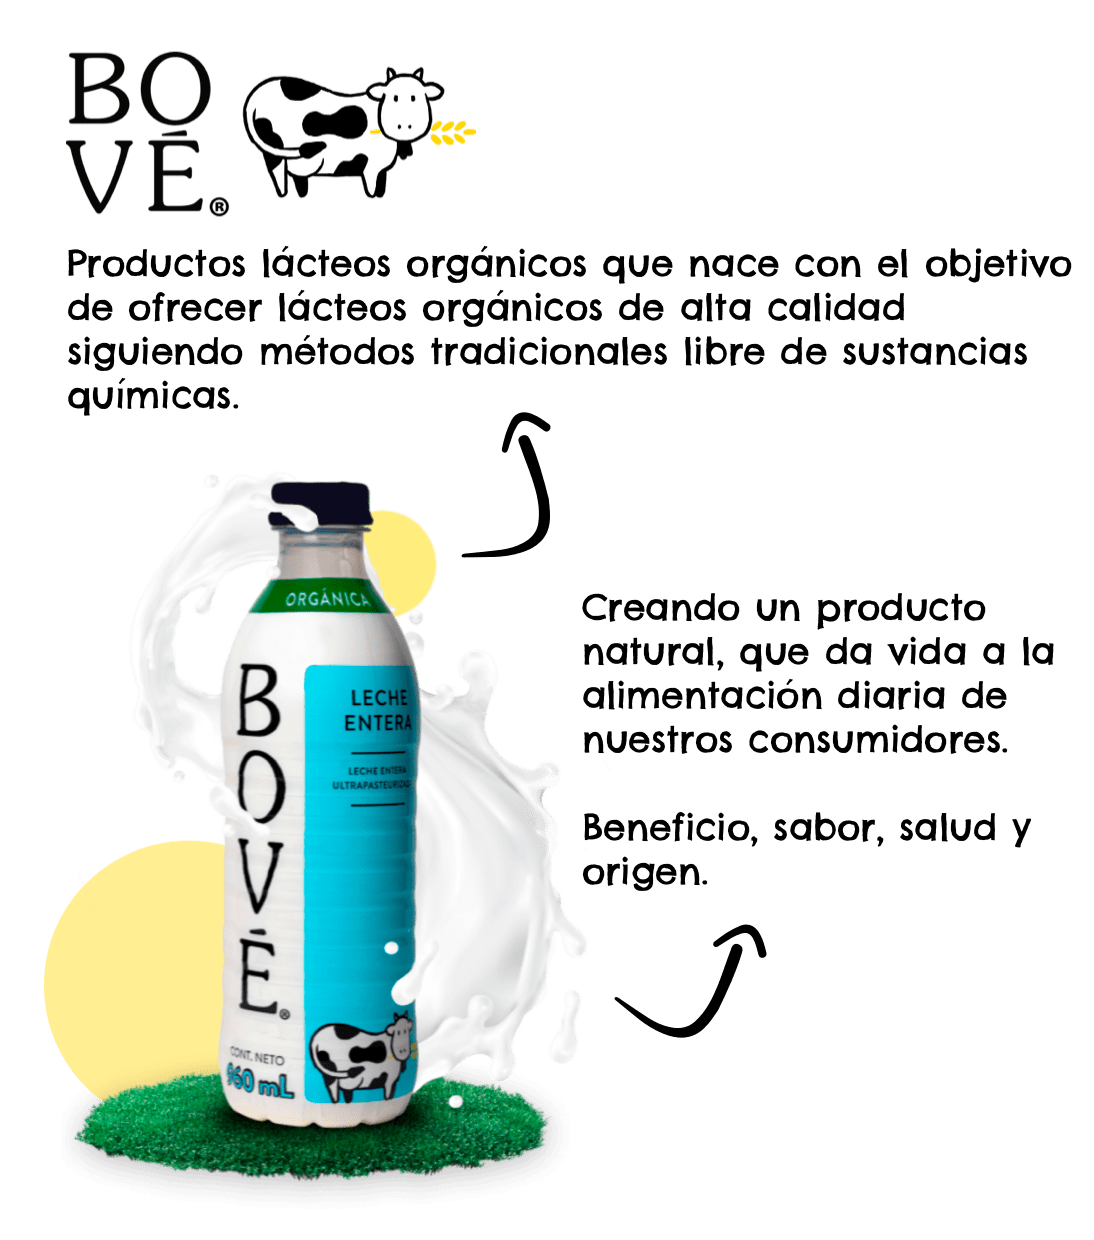 Bové productos lácteos orgánicos